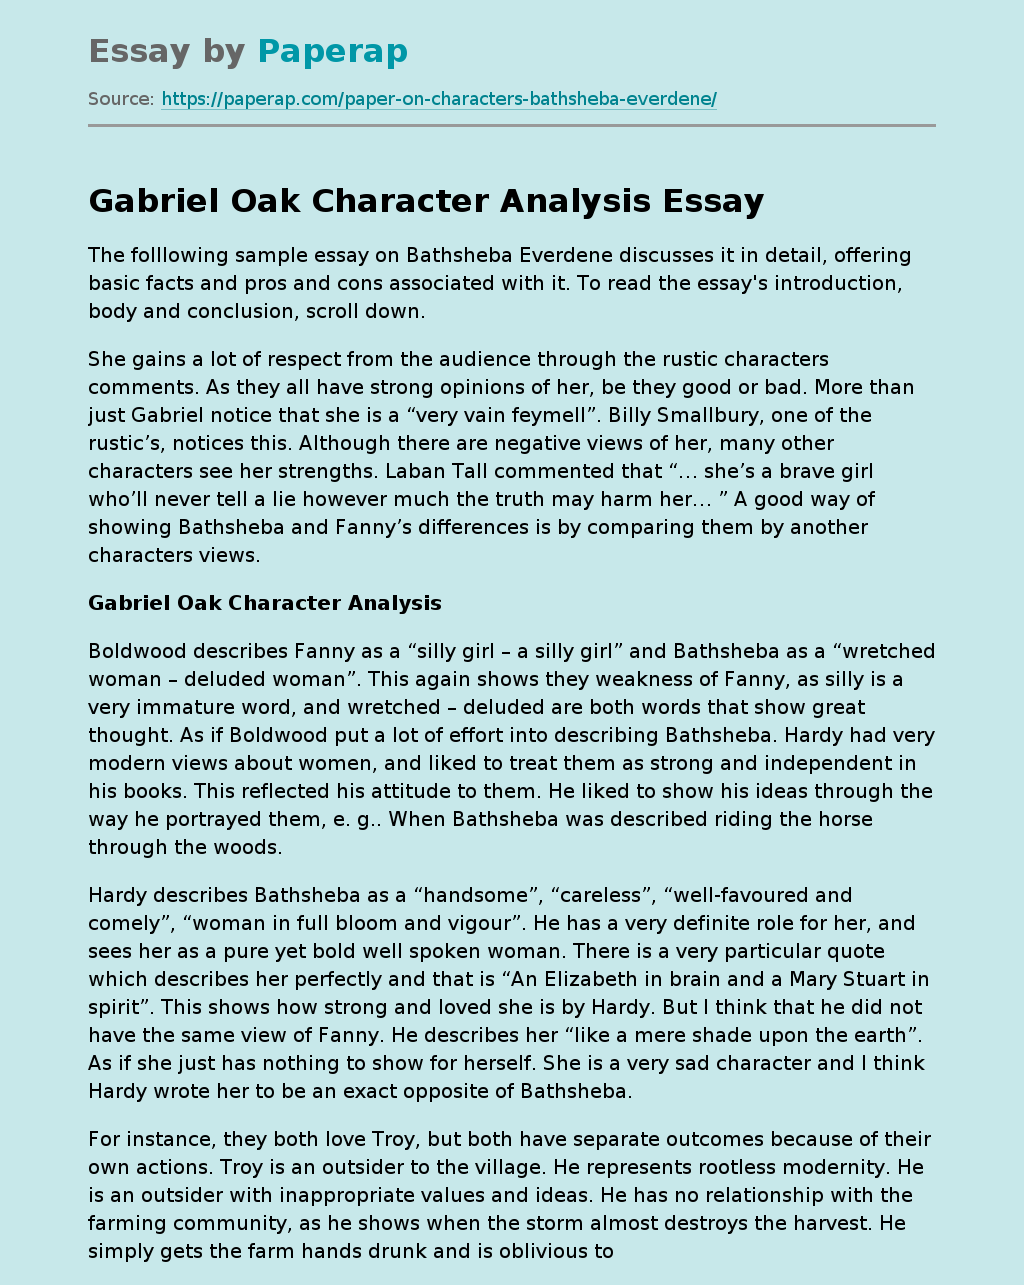 Gabriel Oak Character Analysis